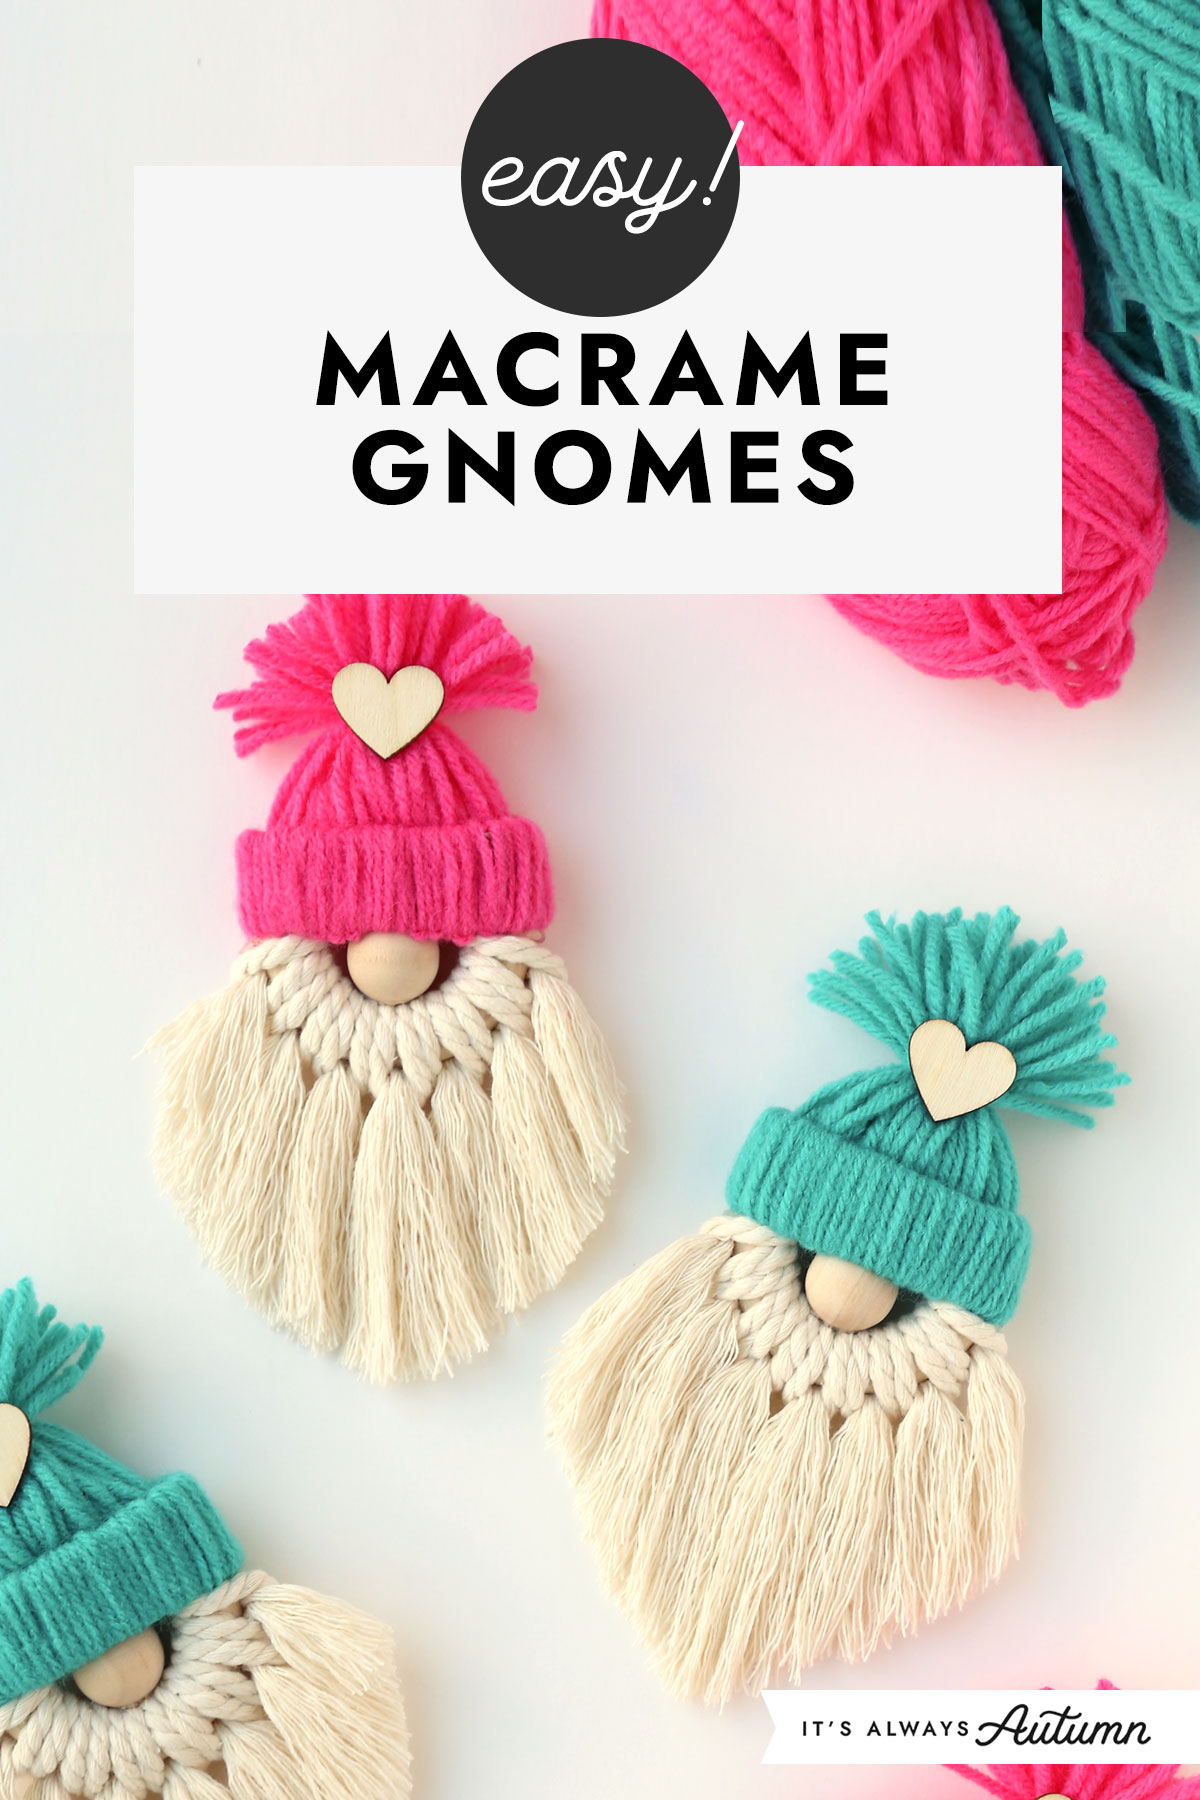 Easy! Macrame gnomes.